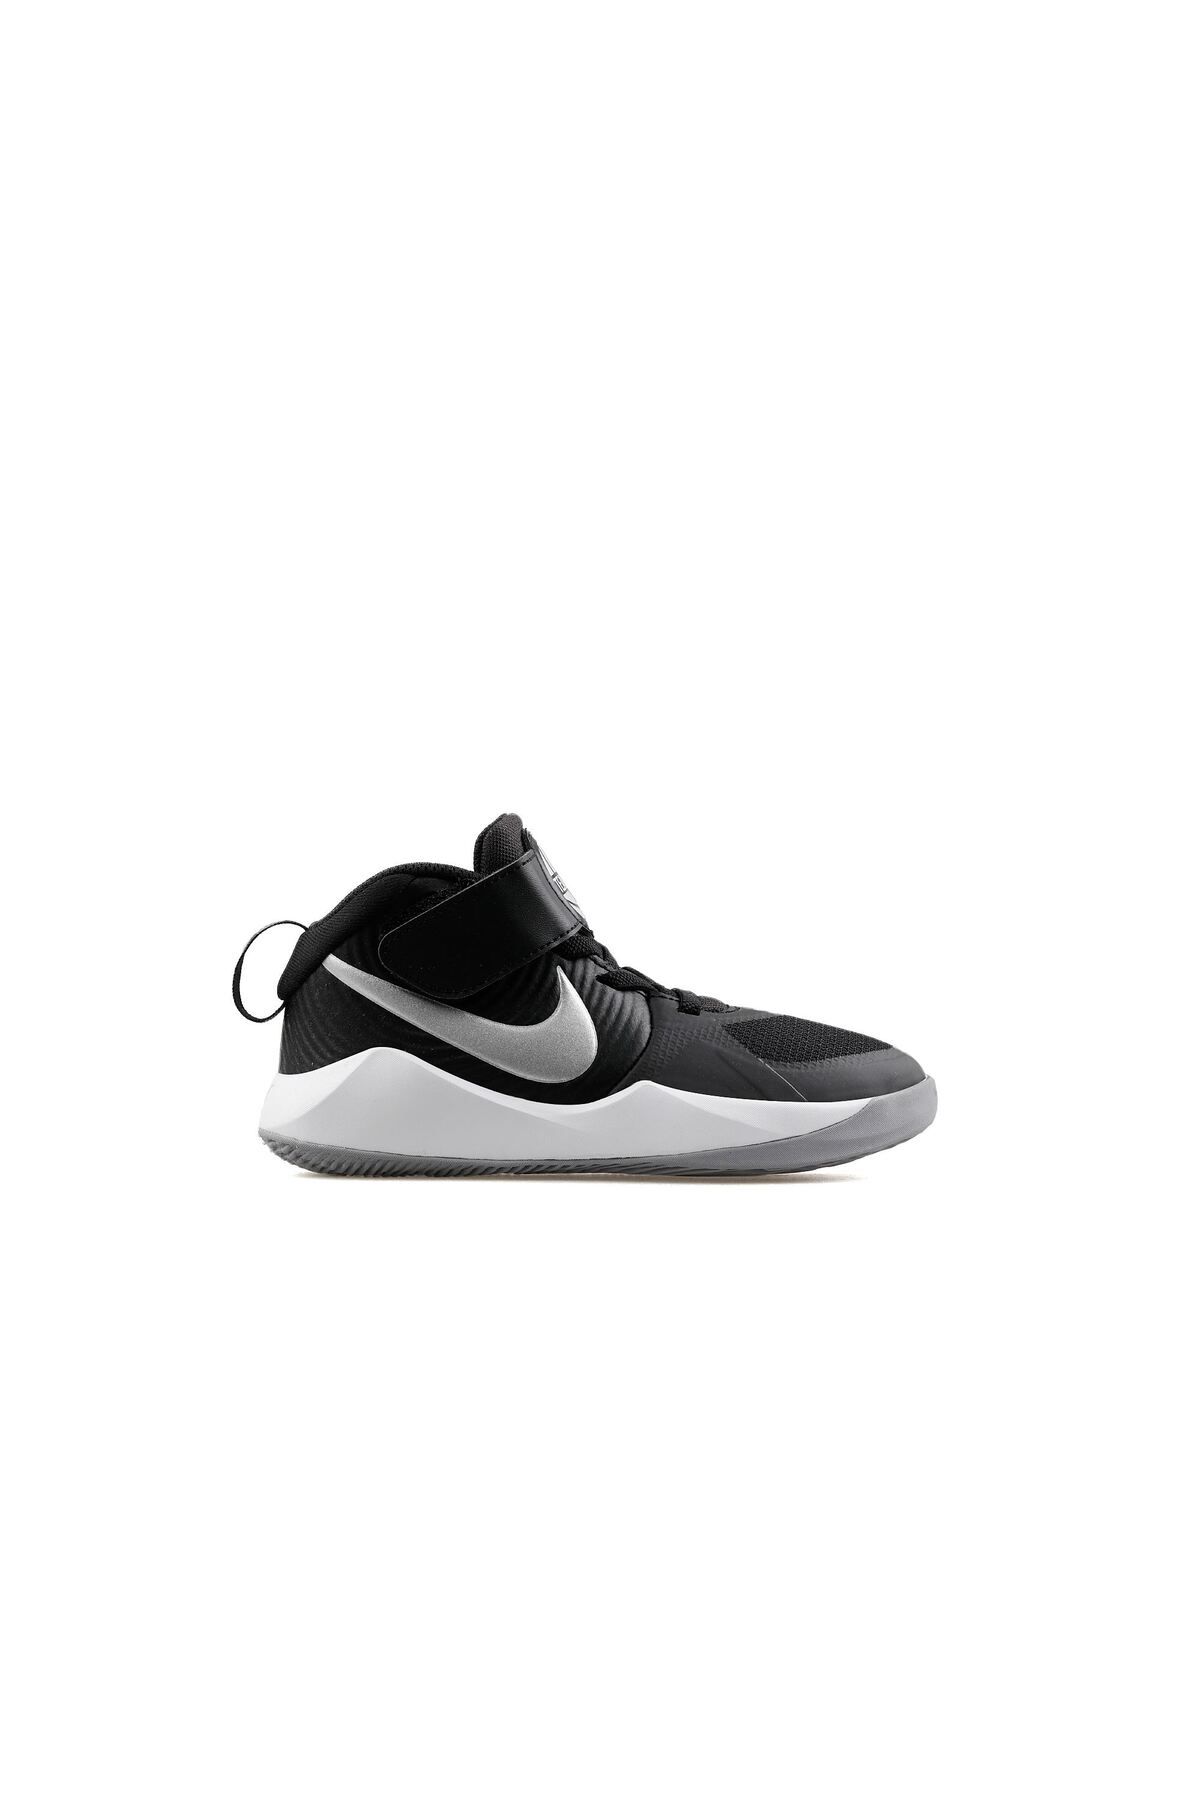 Nike Black Çocuk Terlik/sandalet Aq4225-001-001